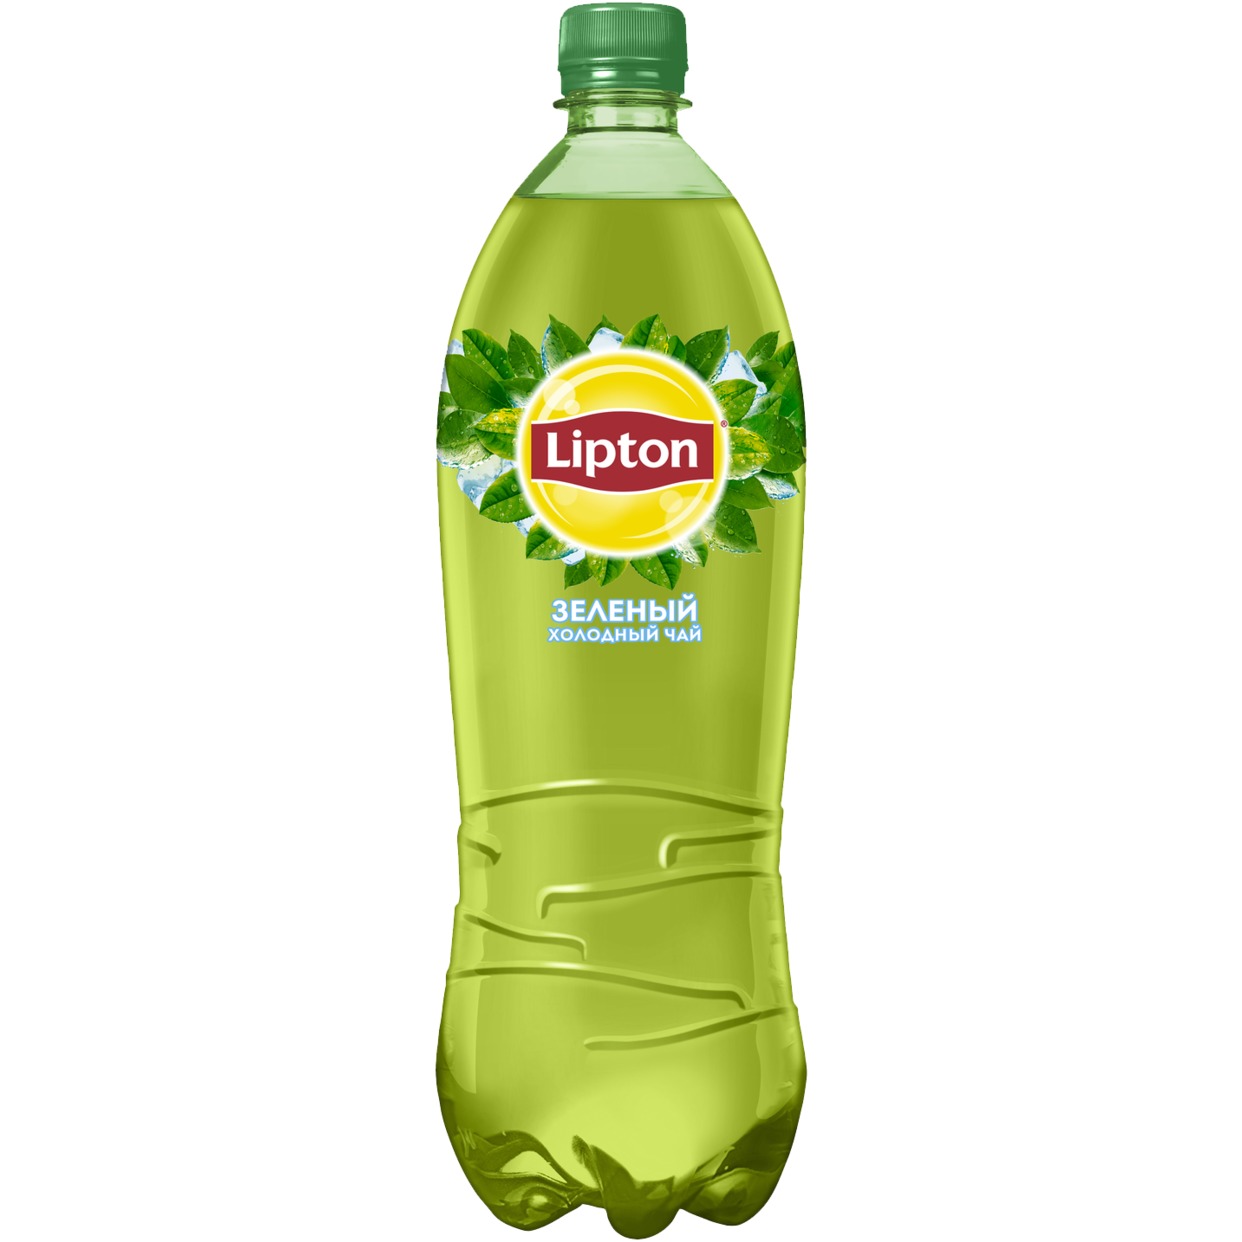 LIPTON Напиток ICE TEA зел.1л по акции в Пятерочке